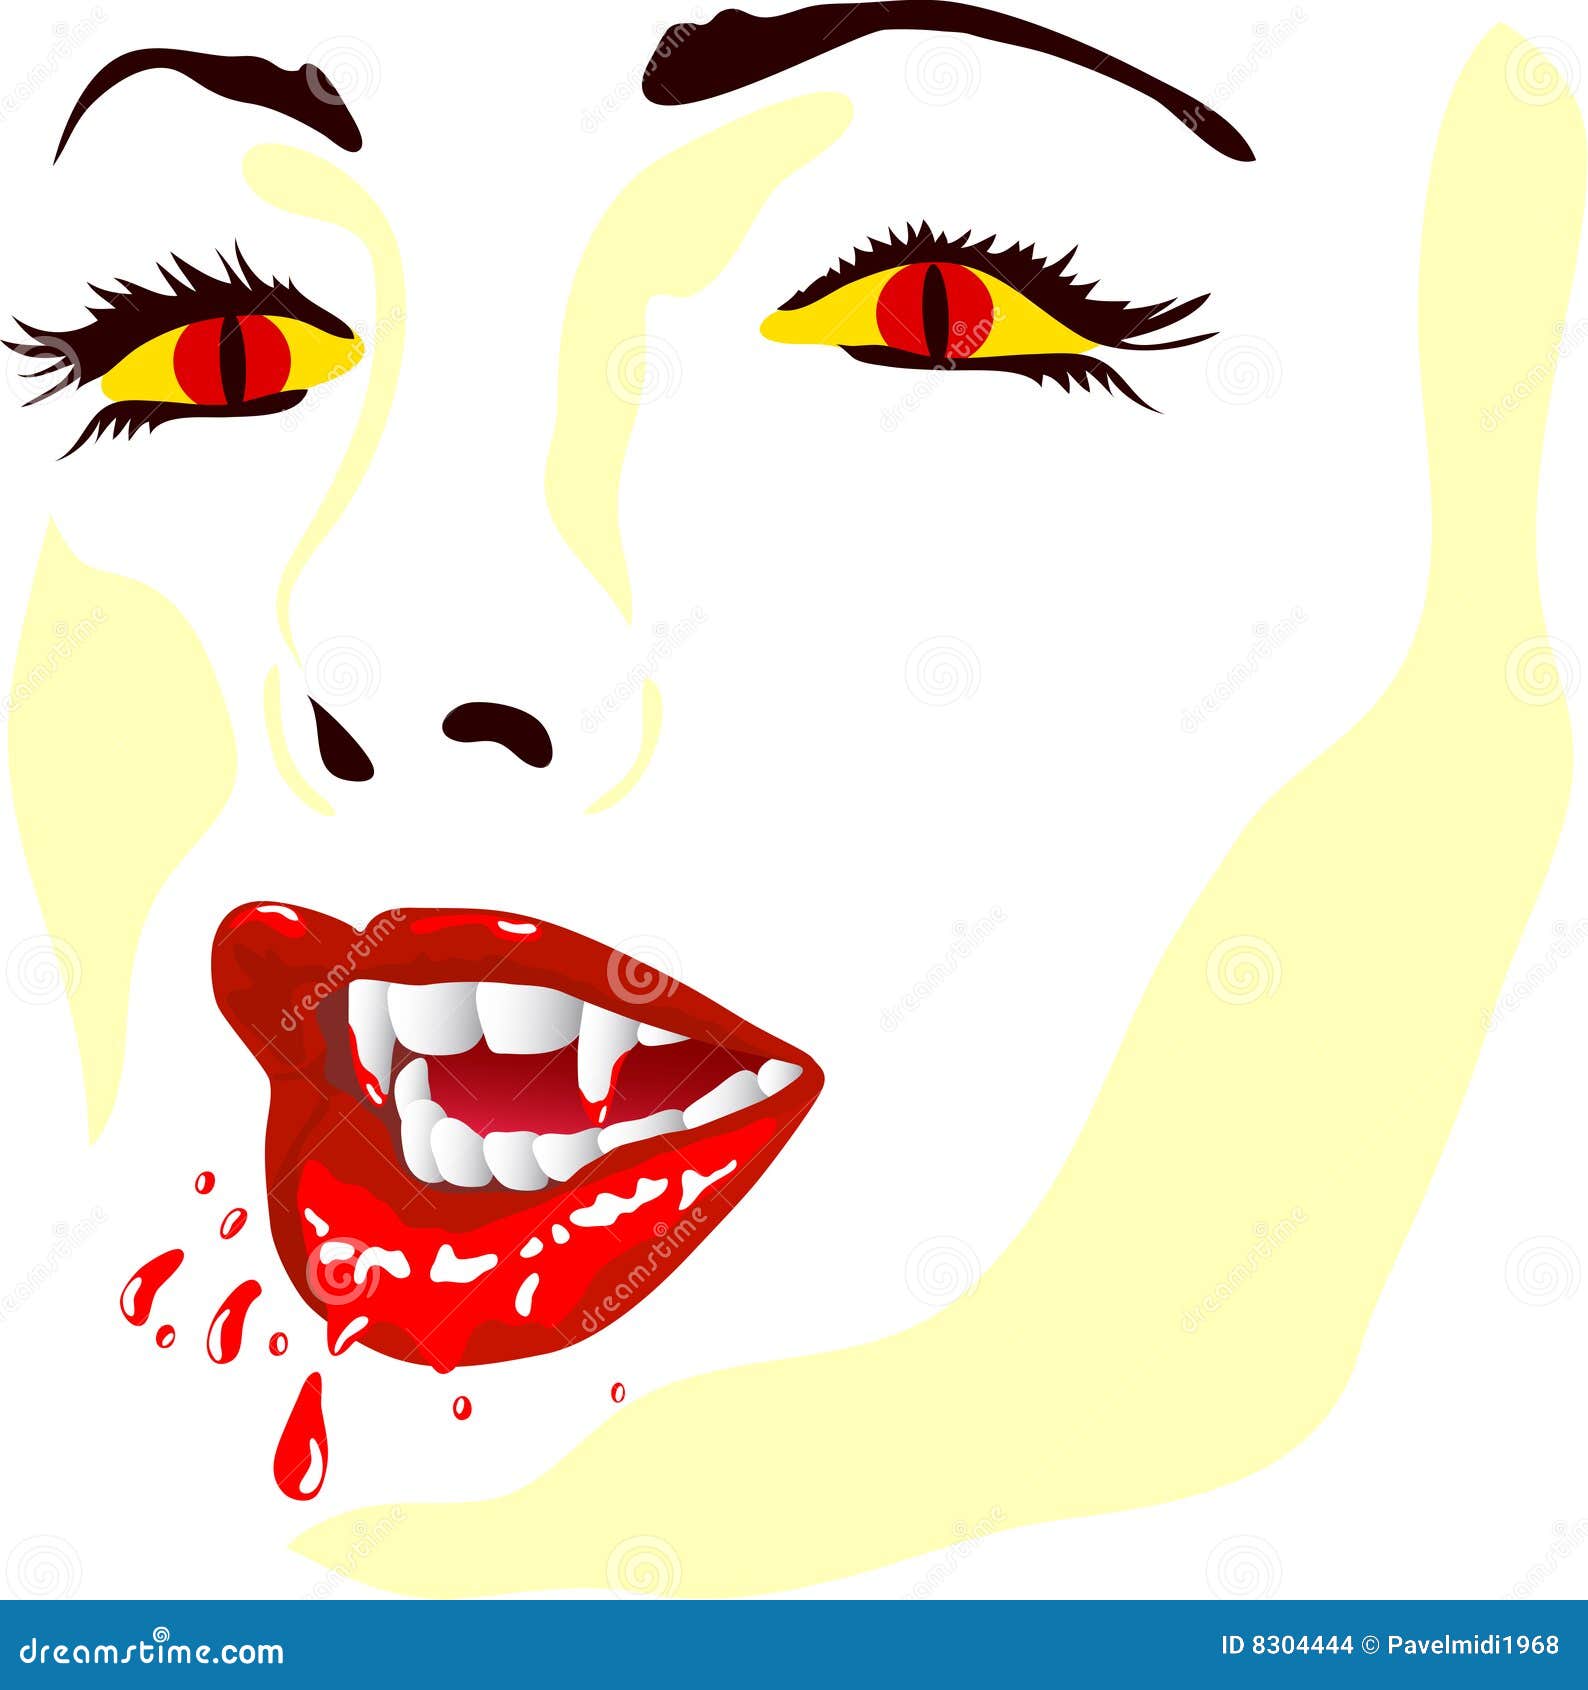 Vamp face stock vector. Illustration of hell, halloween - 8304444